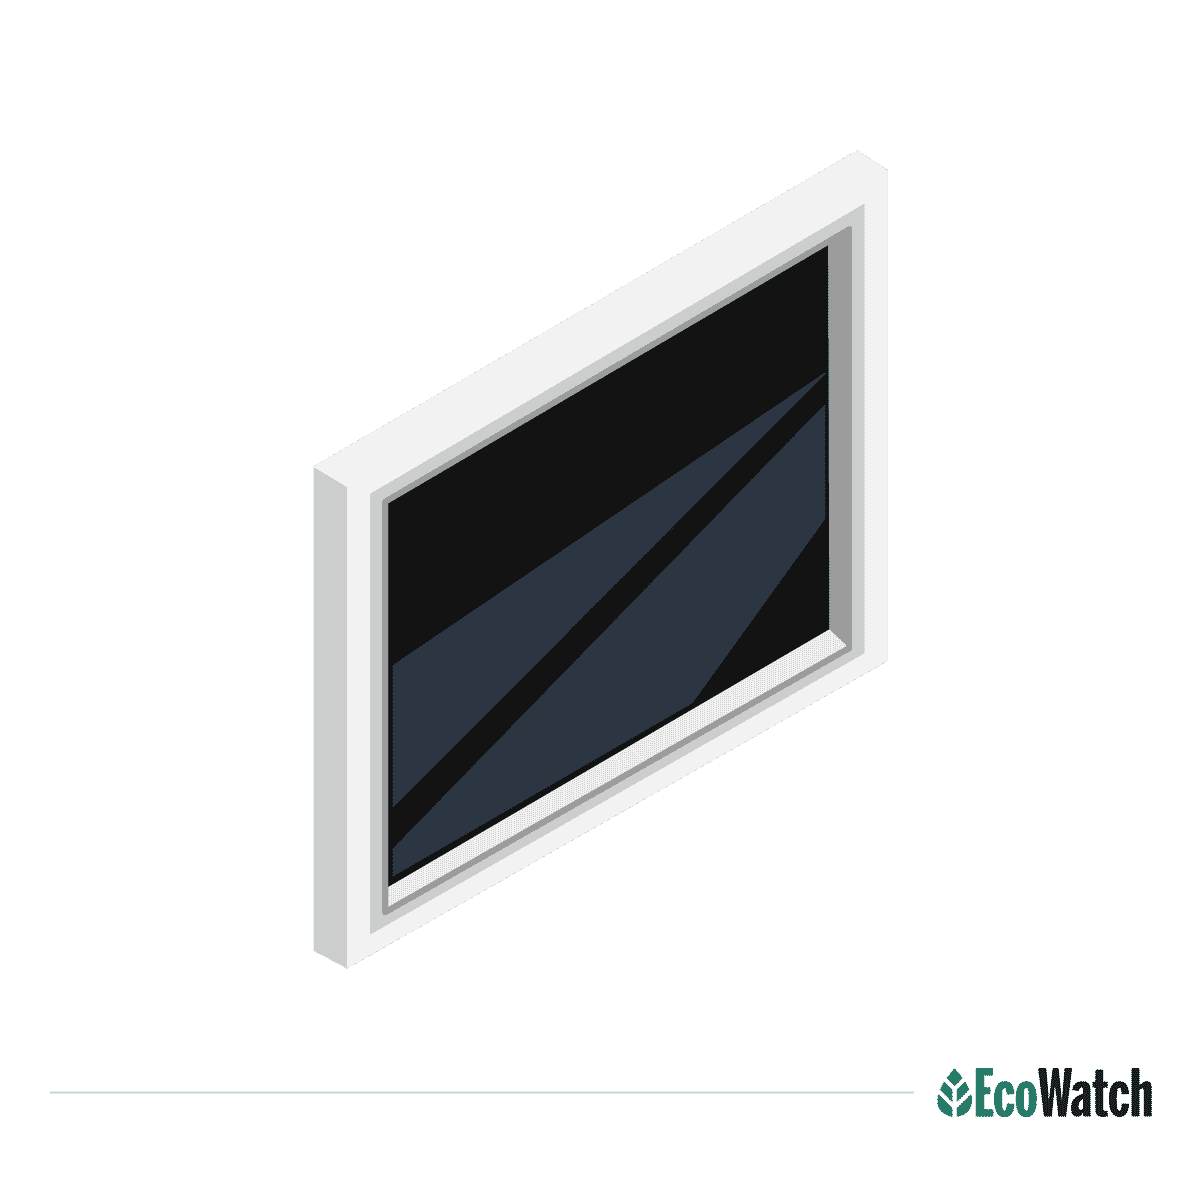 Transom Window type